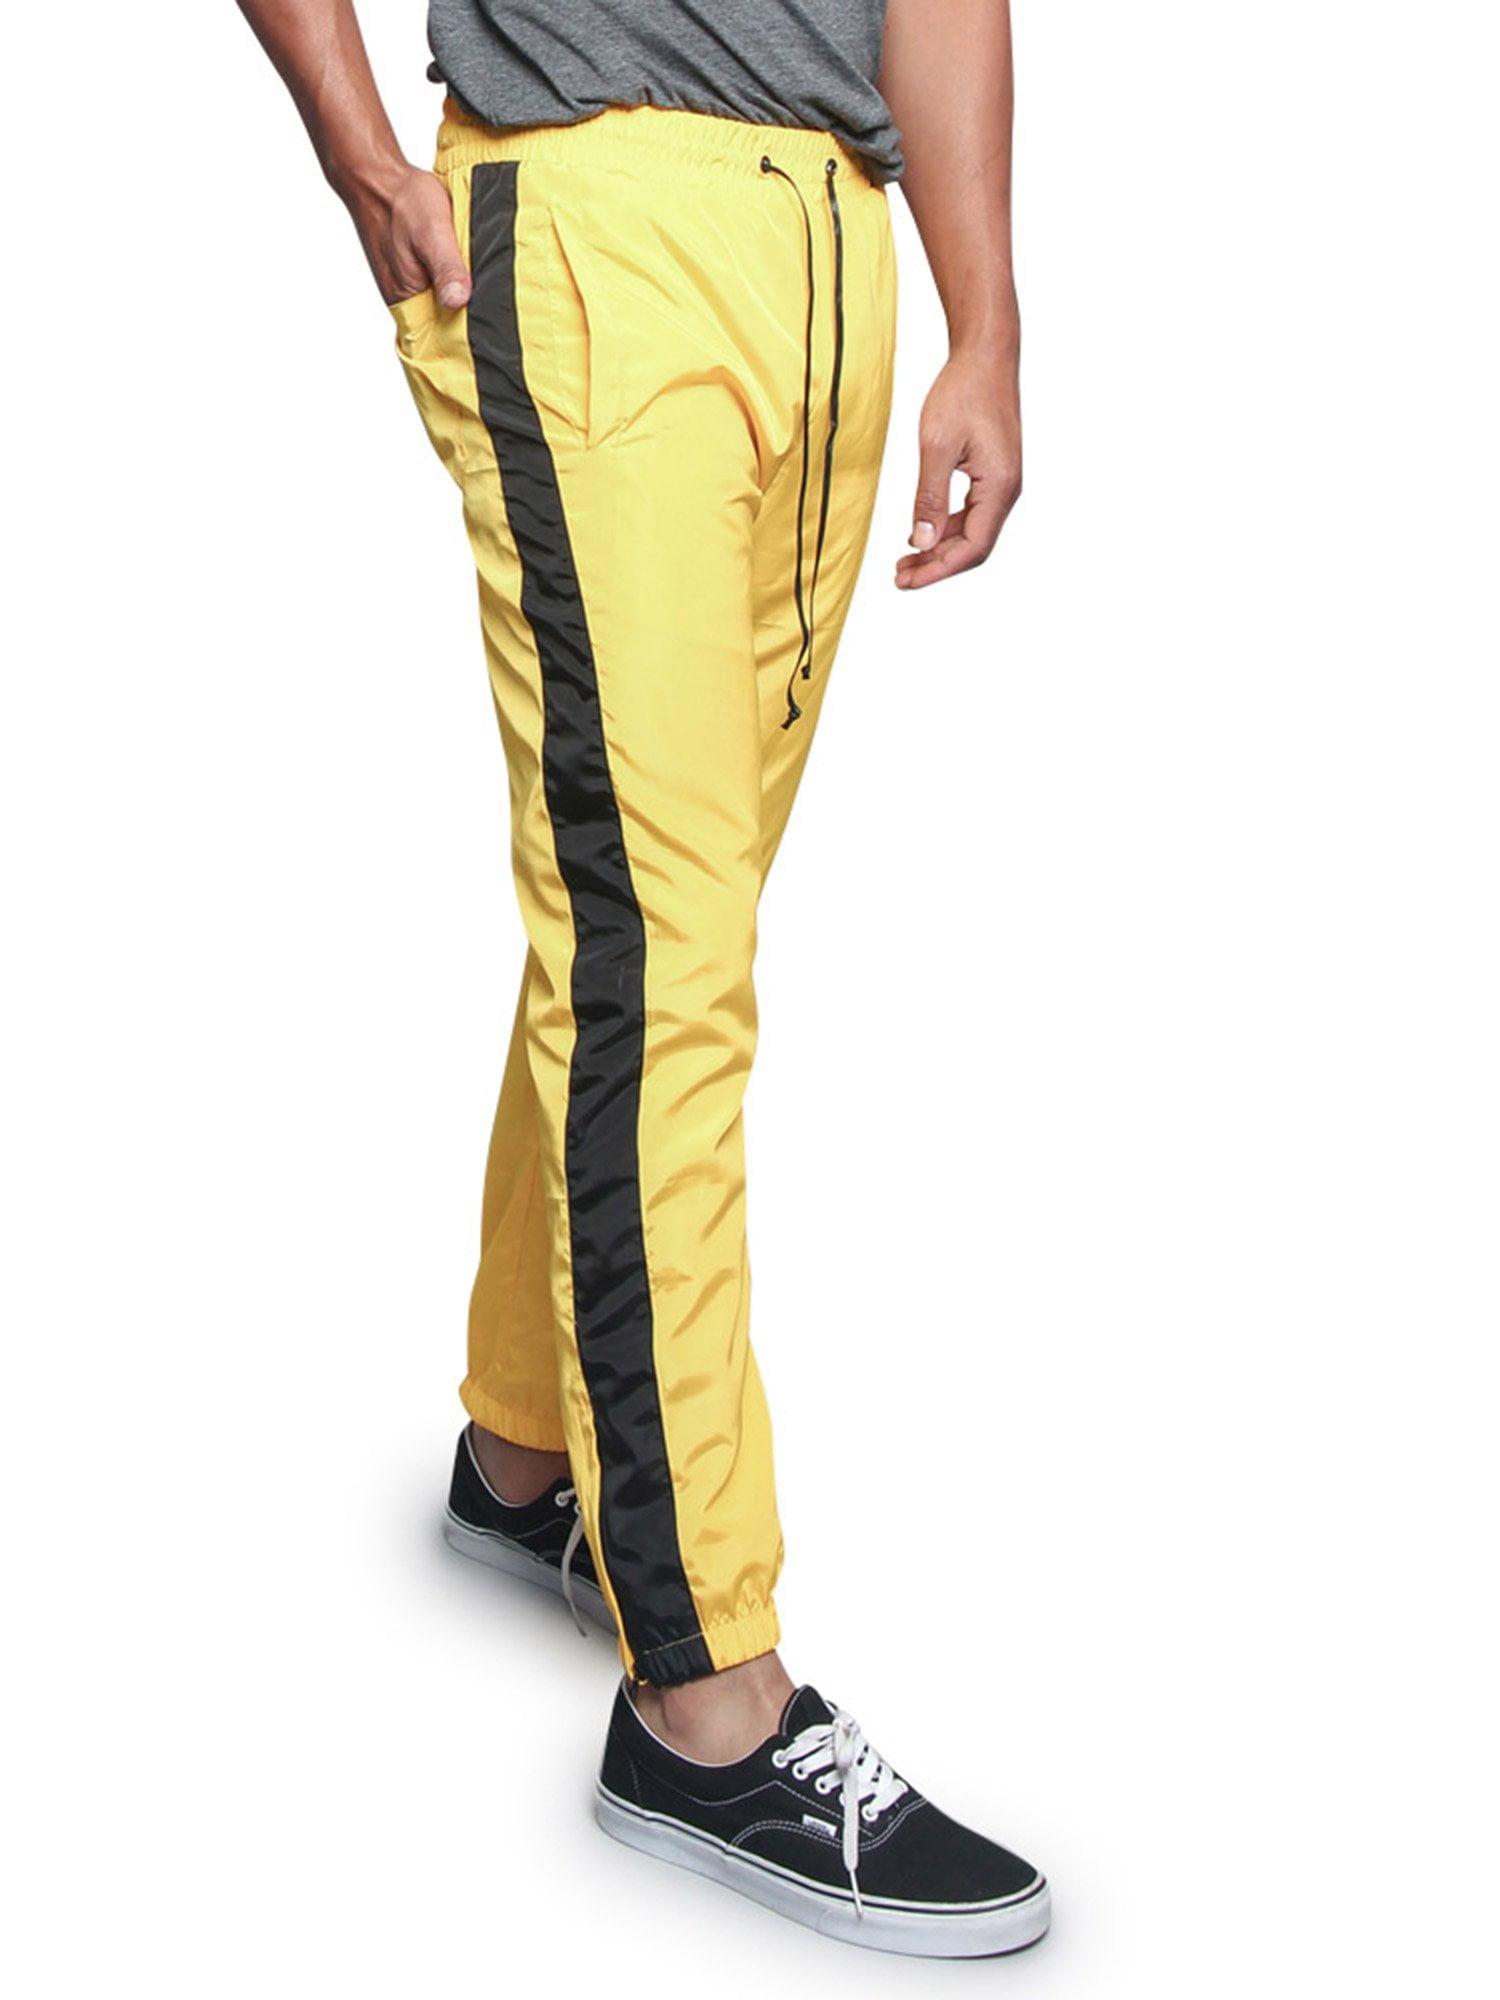 G-Star Raw Men's Side Stripe Track Pants, Created for Macy's - Macy's